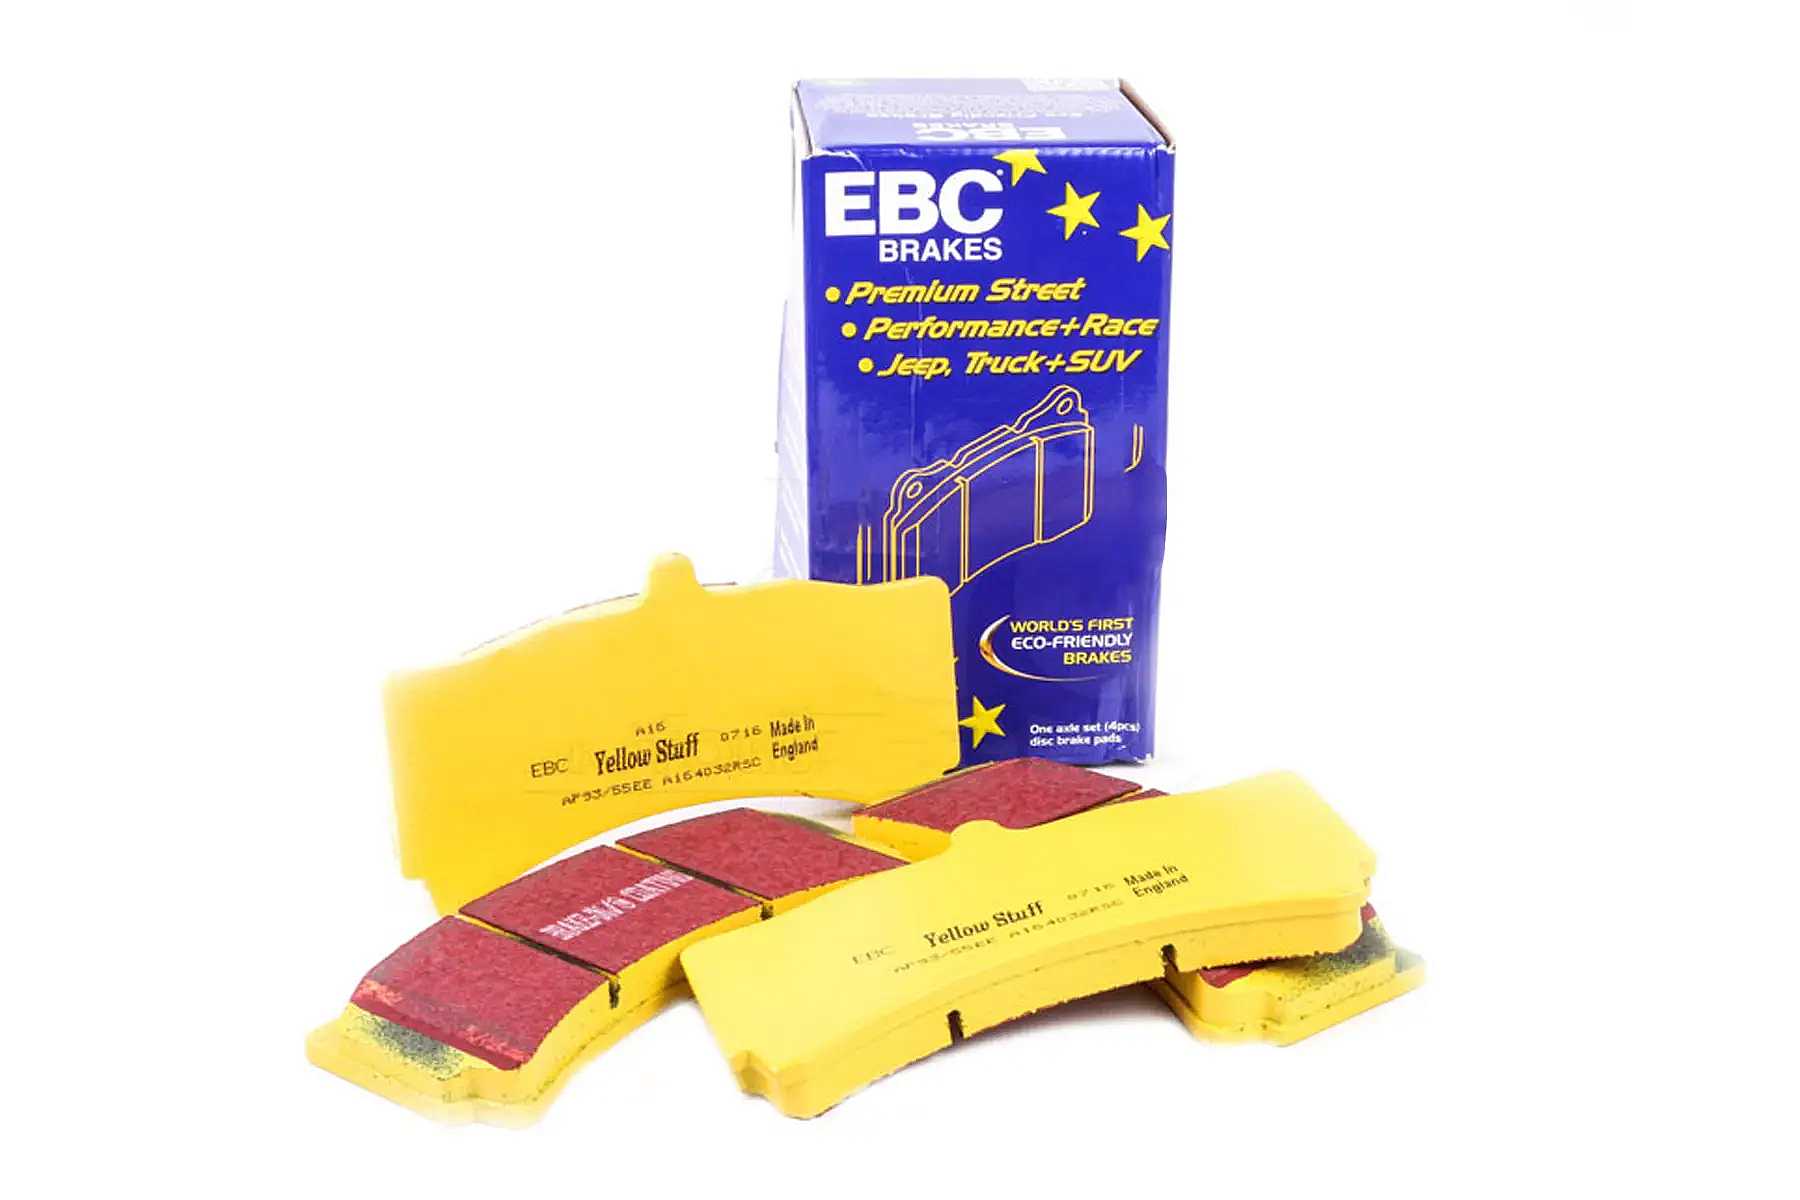 EBC Yellow Stuff Pads for the Forge Big Brake Kits